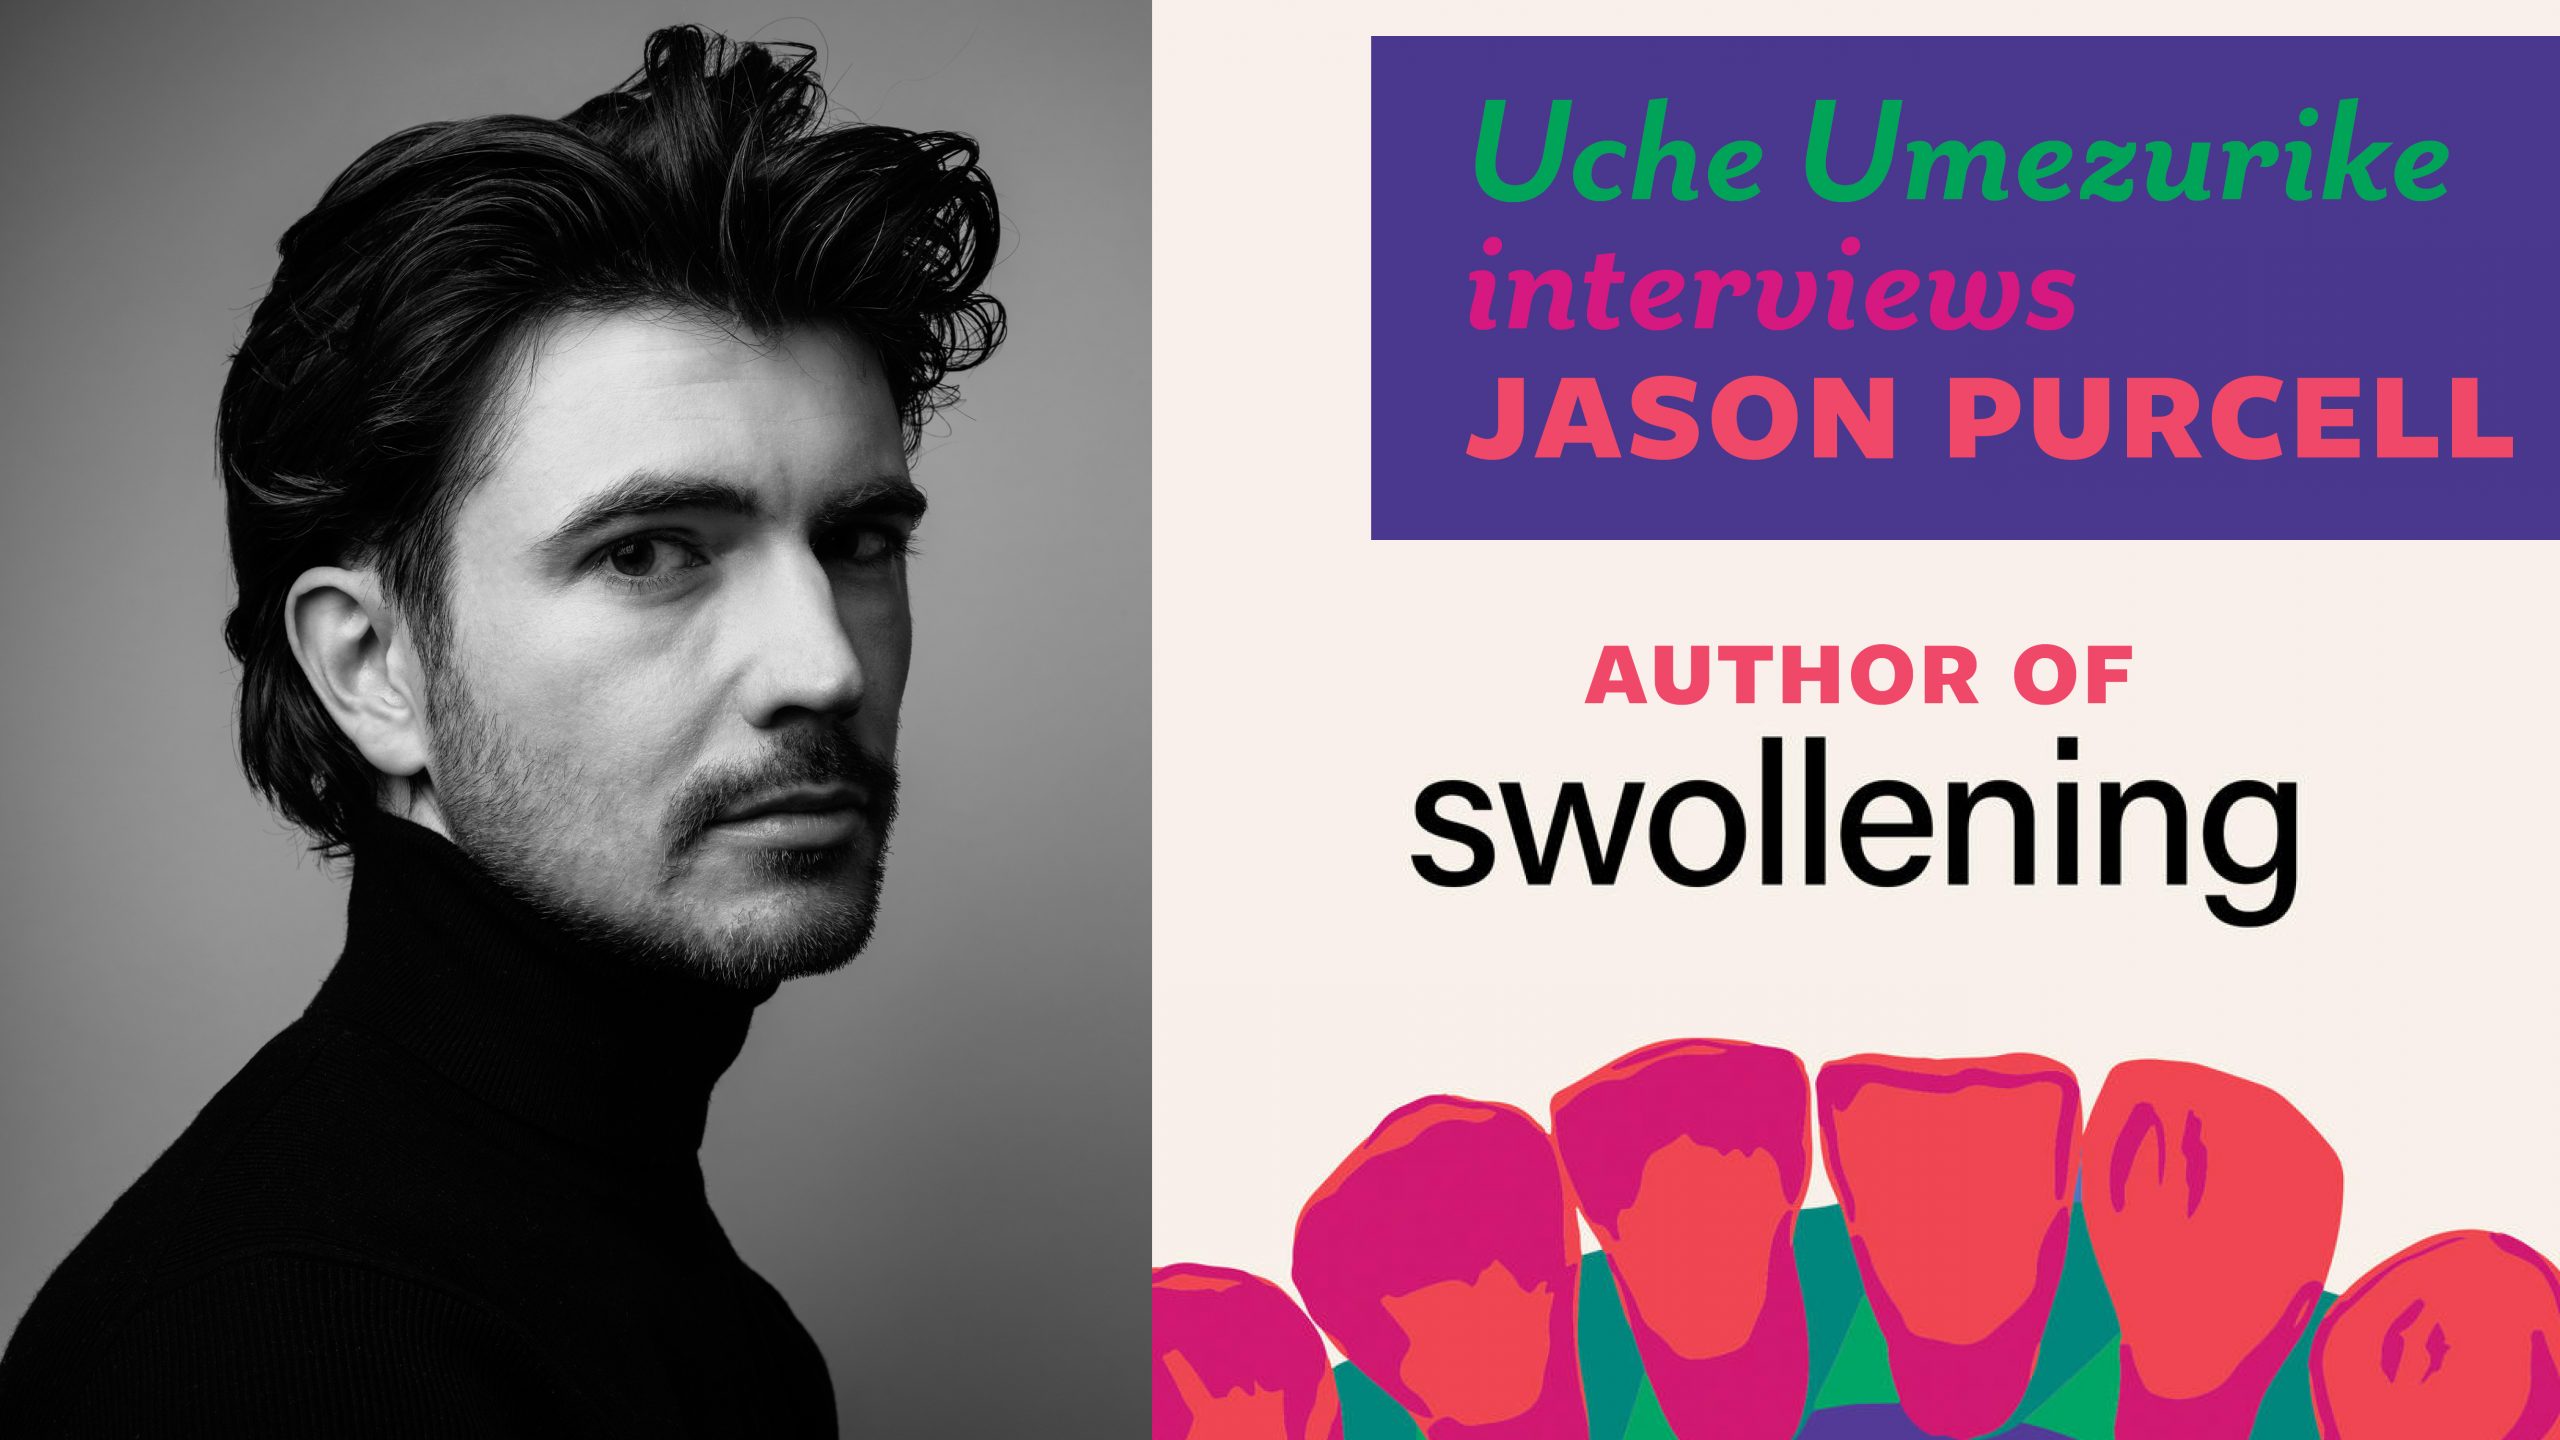 Uche Umezurike interviews Jason Purcell, author of Swollening